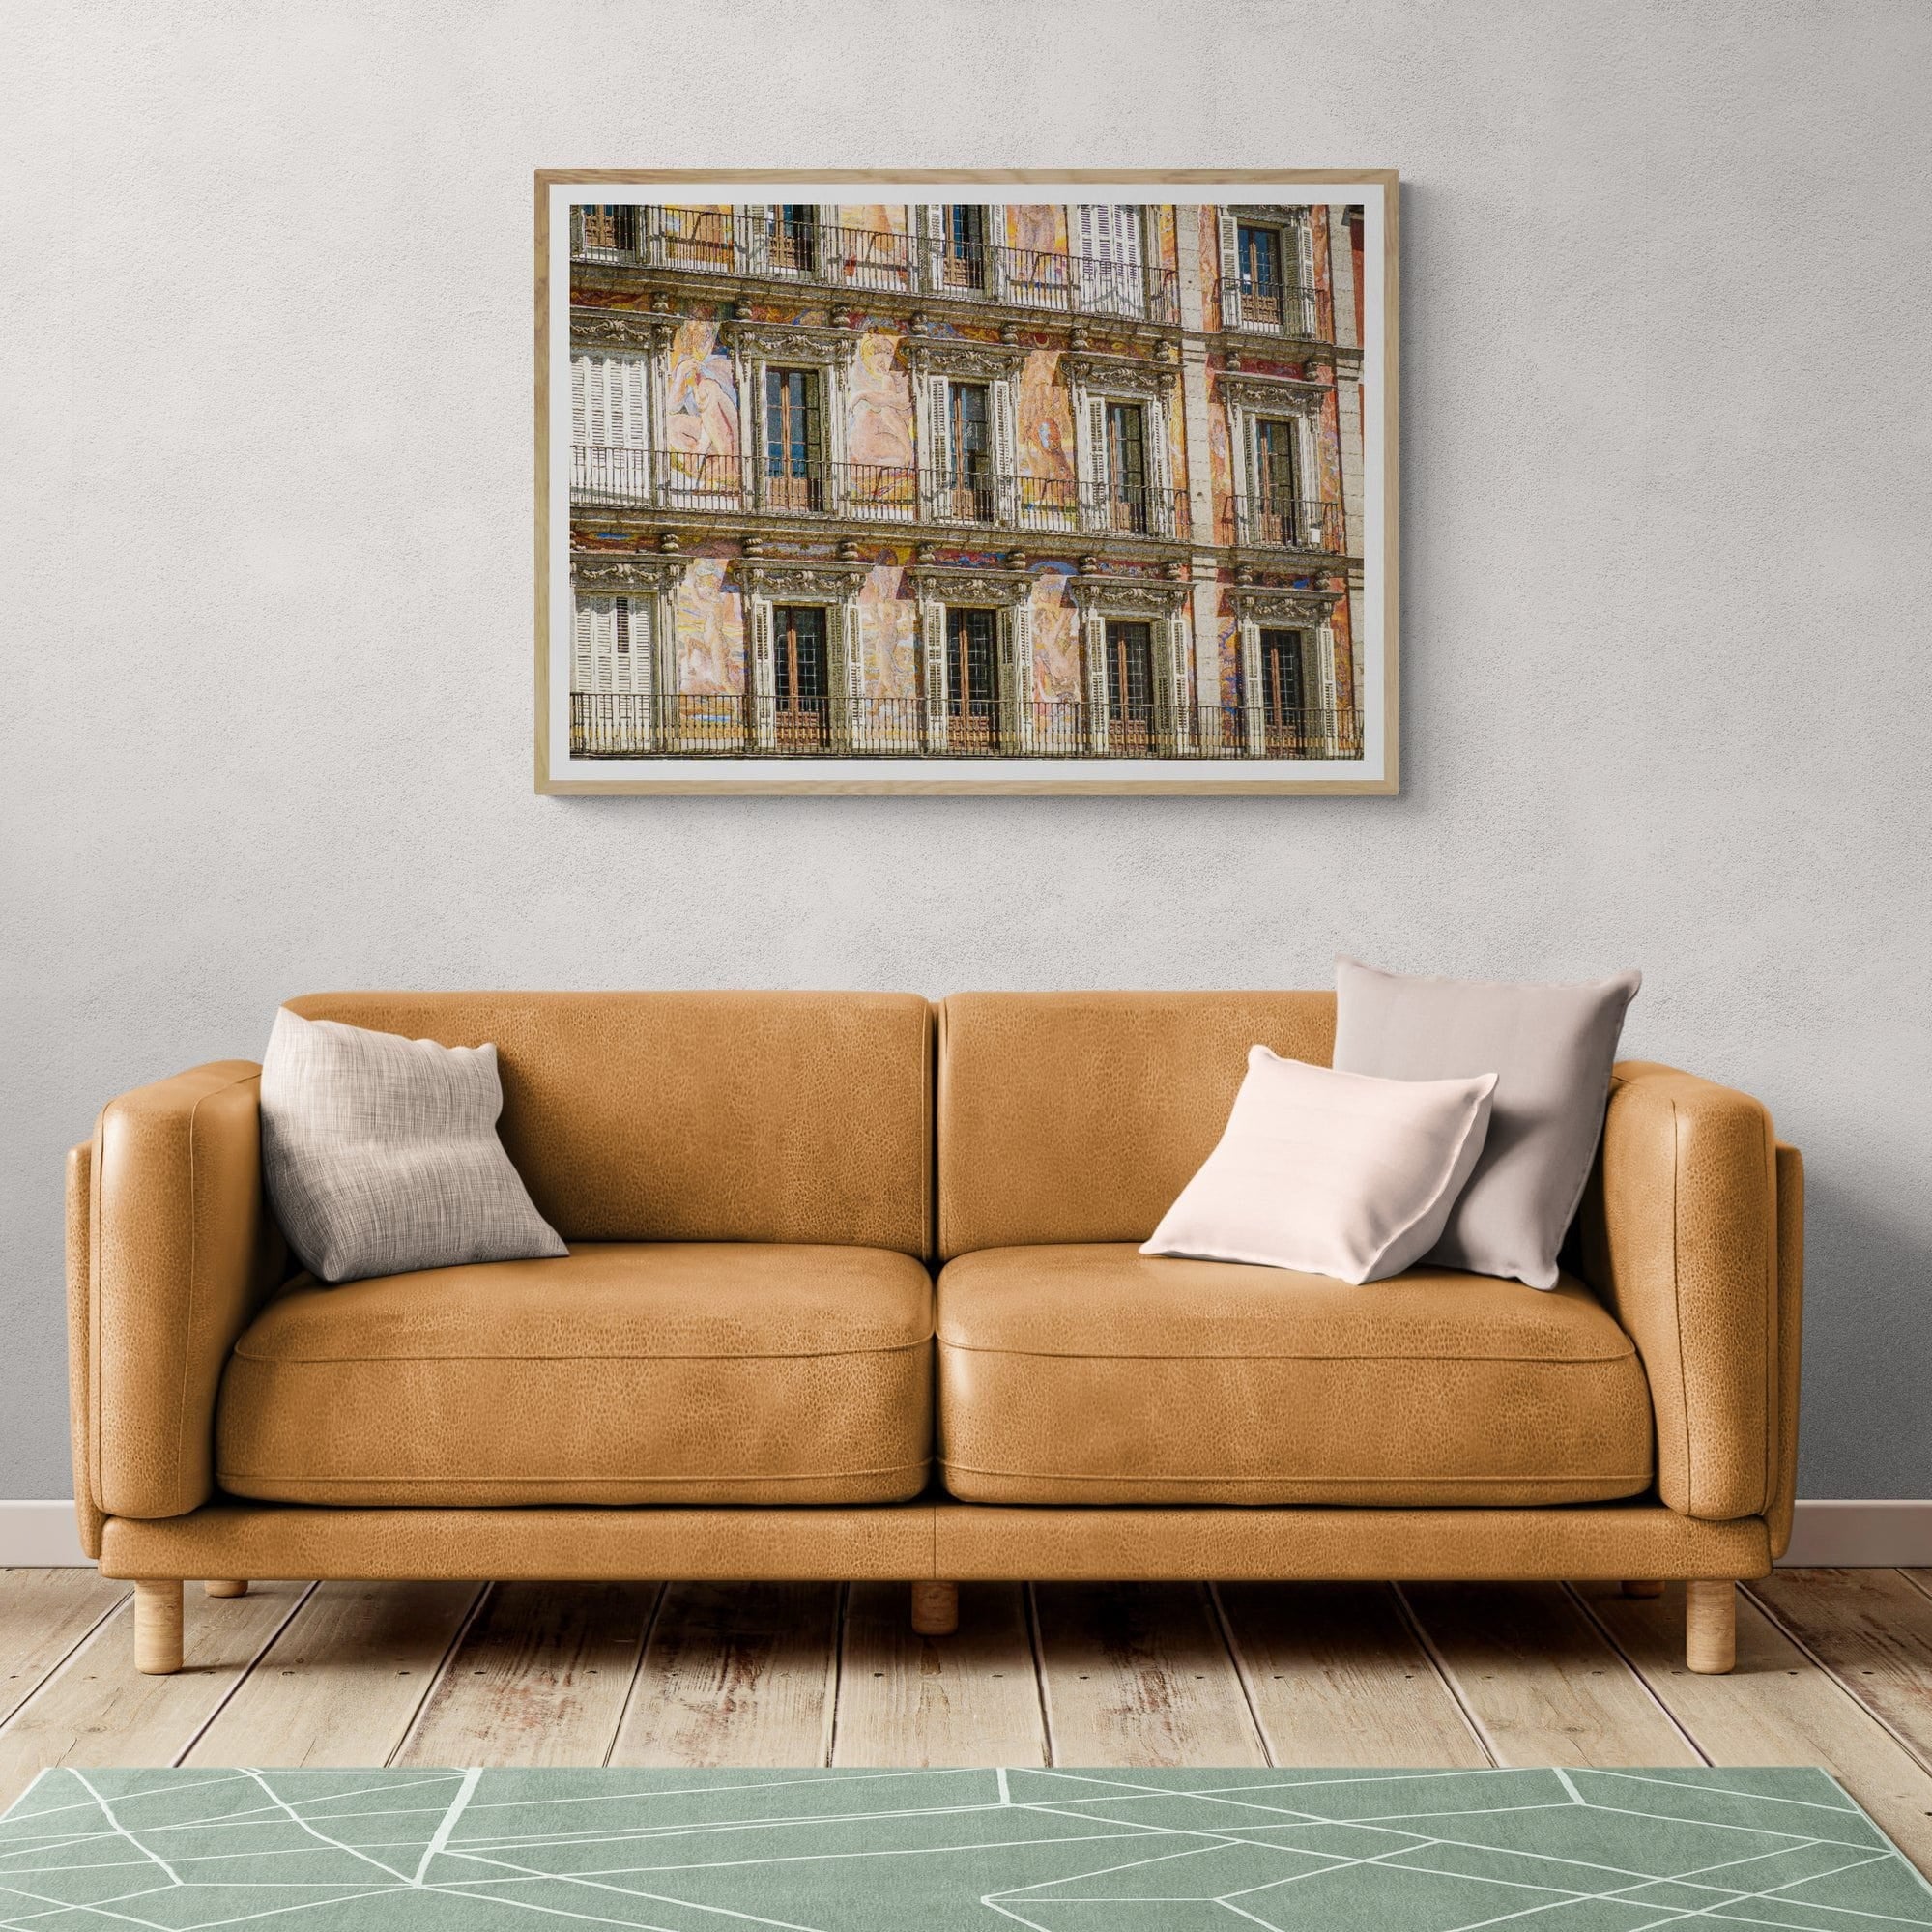 Seek & Ramble Framed Plaza Mayor Balconies Casa de la Panader’a Madrid Framed Print